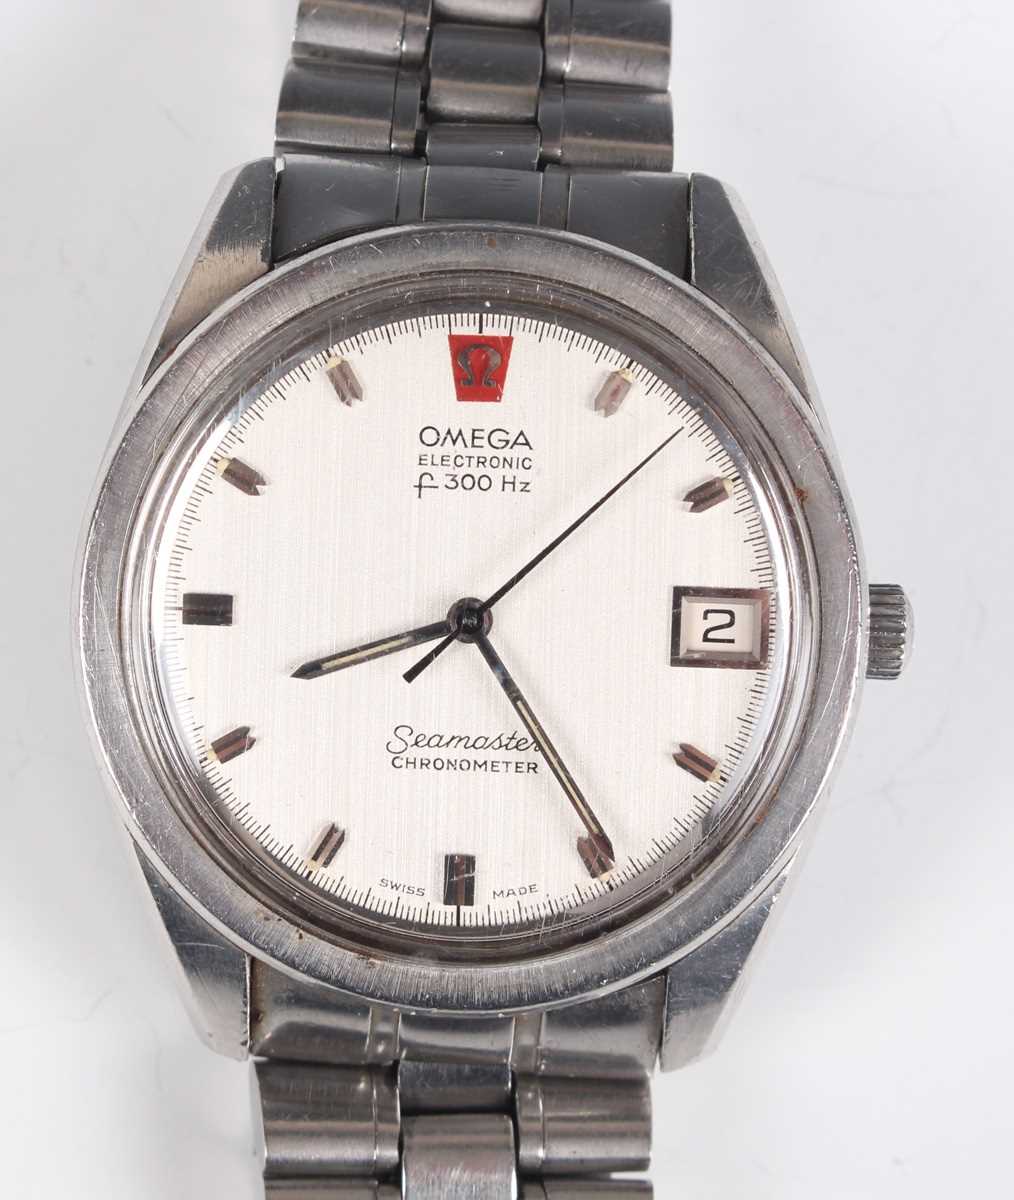 An Omega Electronic F300 Hz Seamaster Chronometer stainless steel gentleman's bracelet wristwatch,